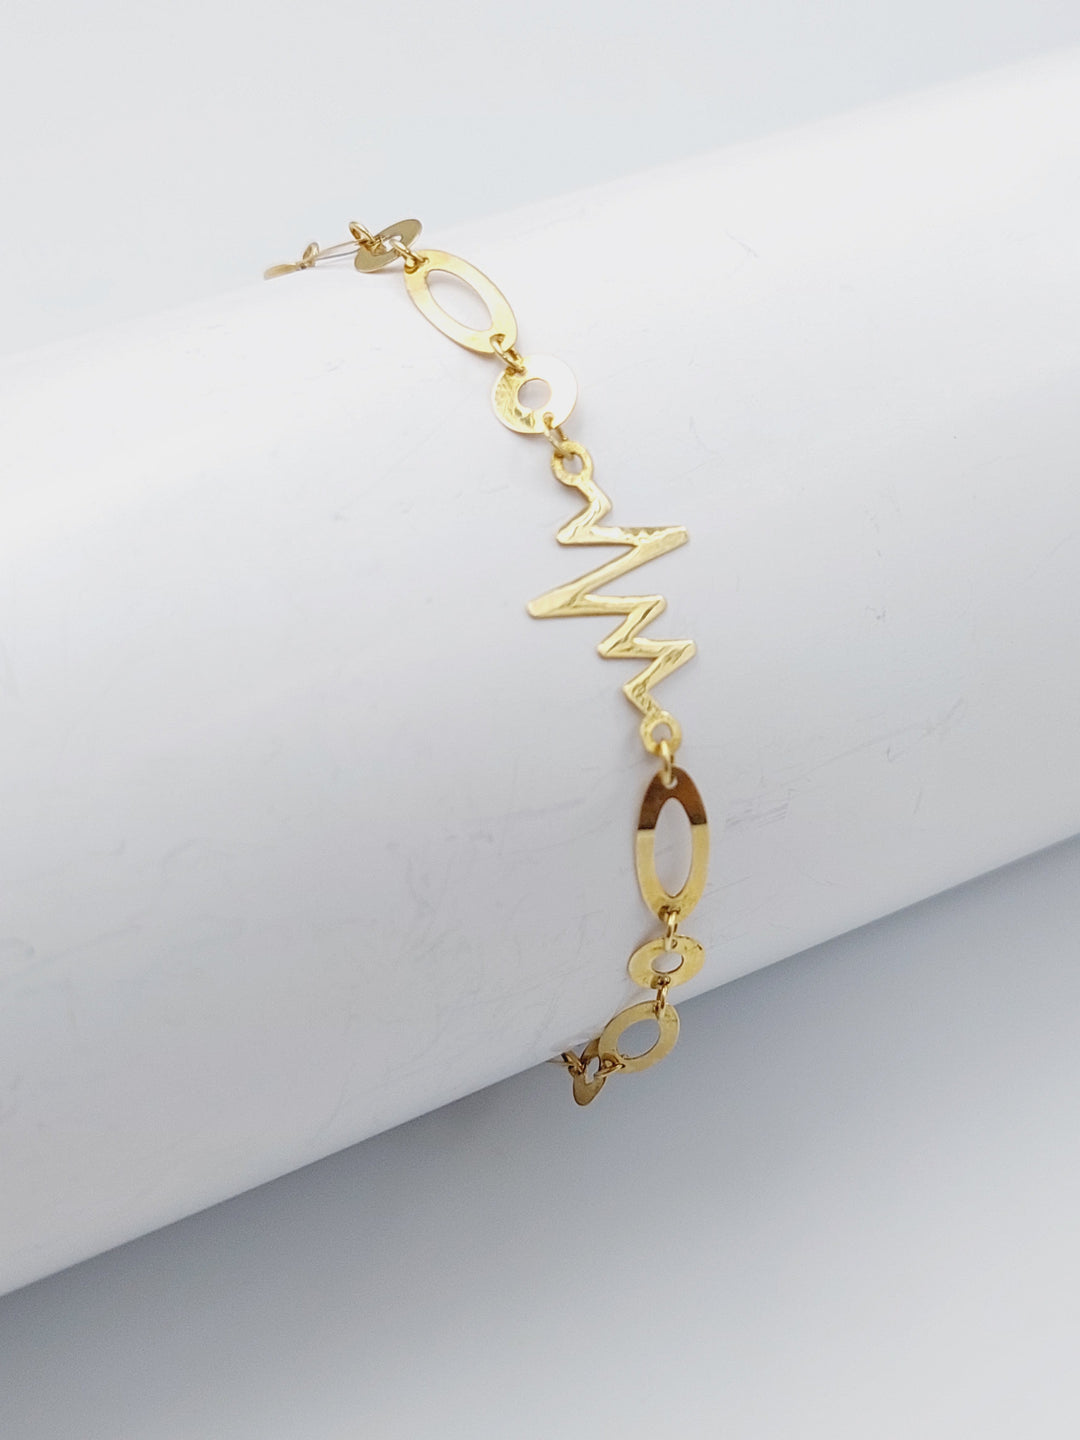 18K Gold Fancy Bracelet by Saeed Jewelry - Image 1